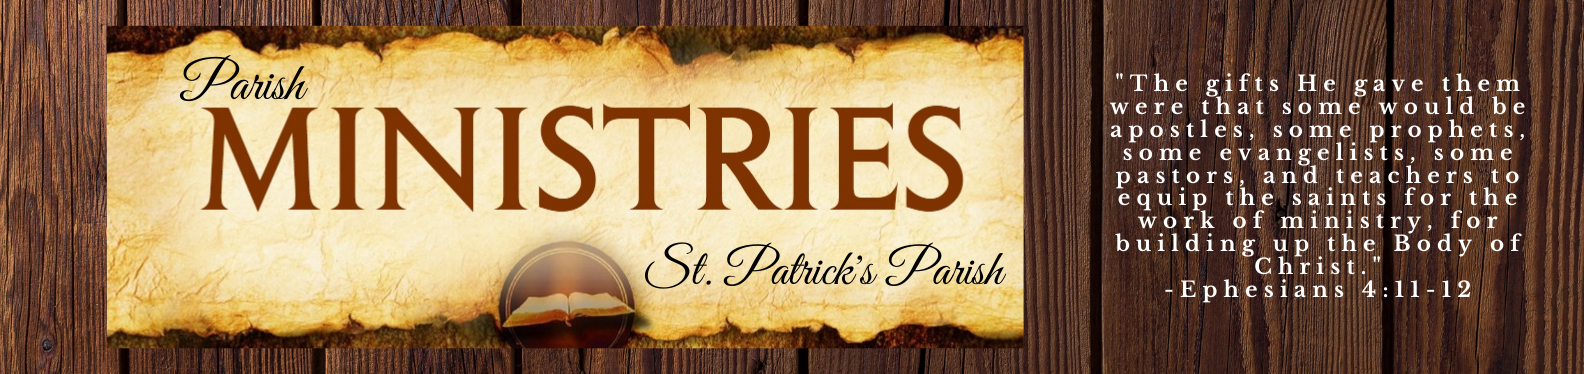 Parish Ministries Banner Revised Version